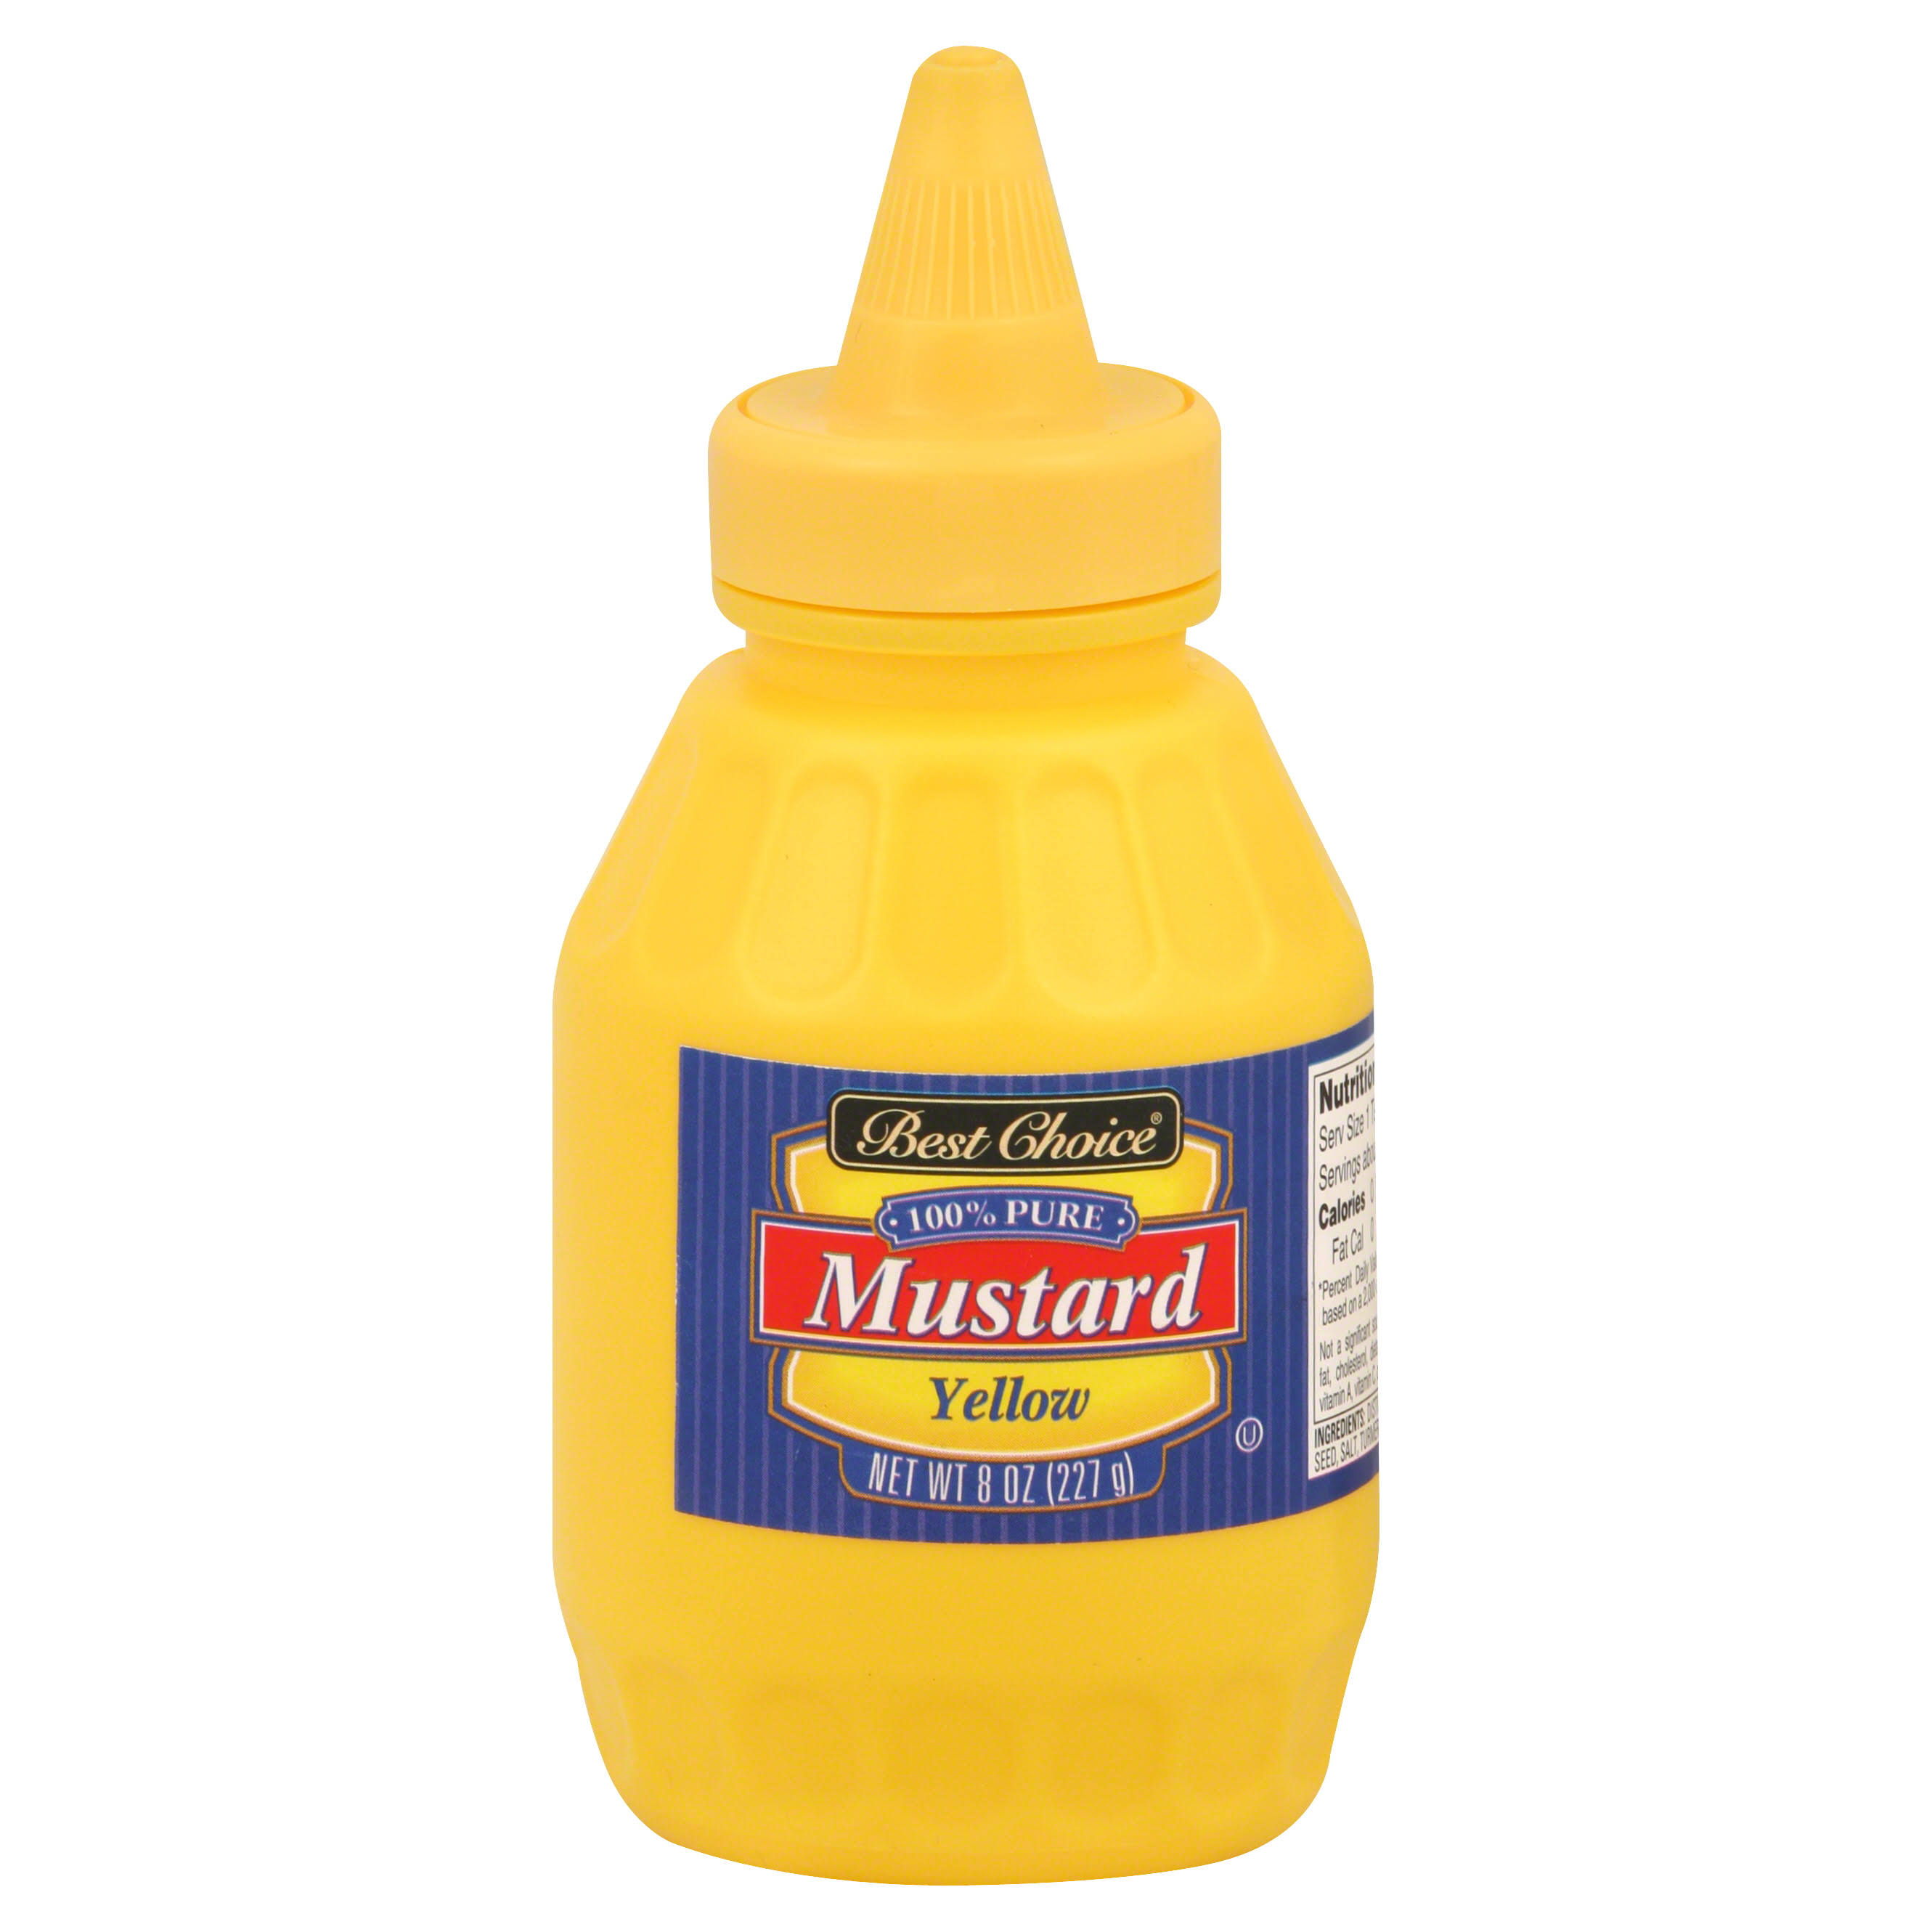 Best Choice Mustard, Yellow - 8 oz